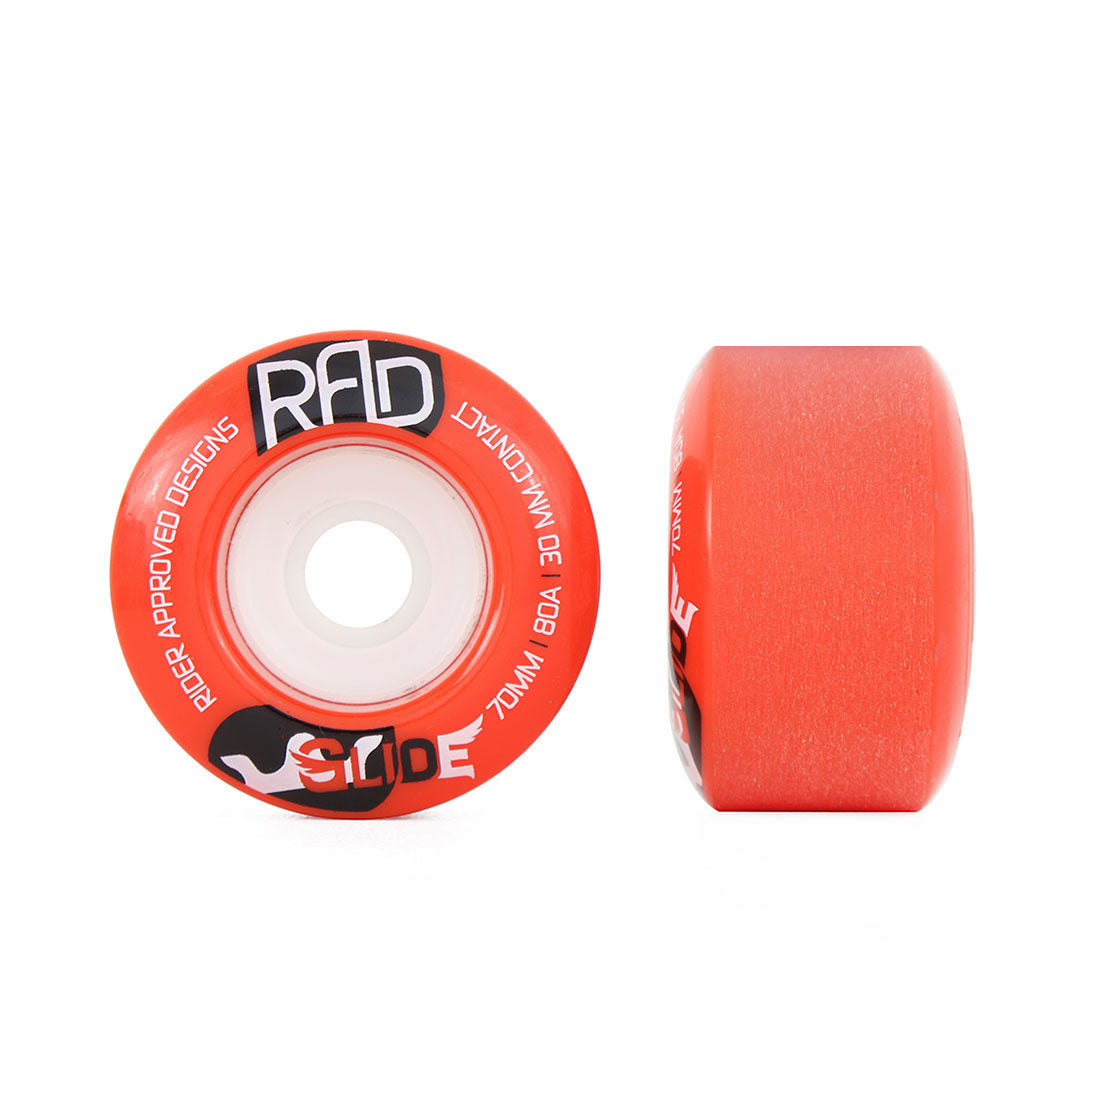 RAD Glide 70mm/80A 4pk - Red Skateboard Wheels